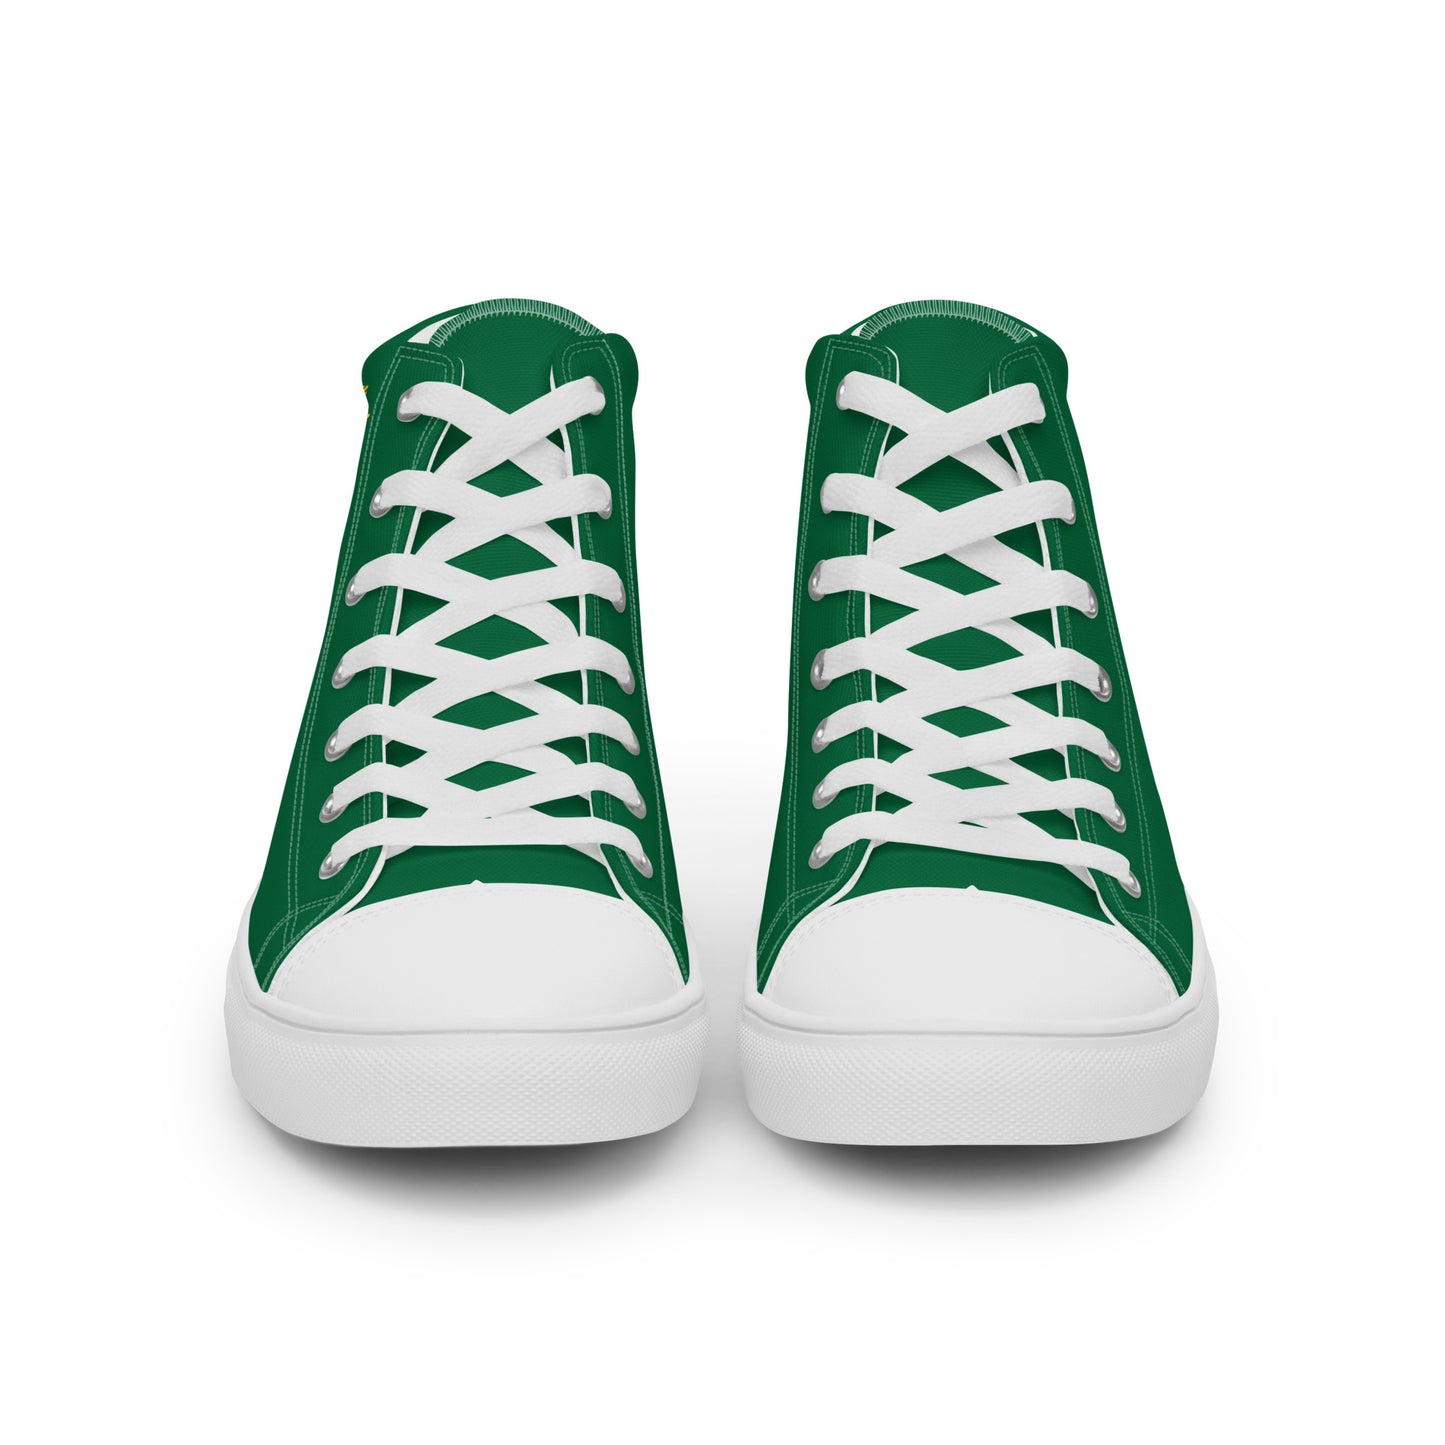 Brasil - Women - Green - High top shoes